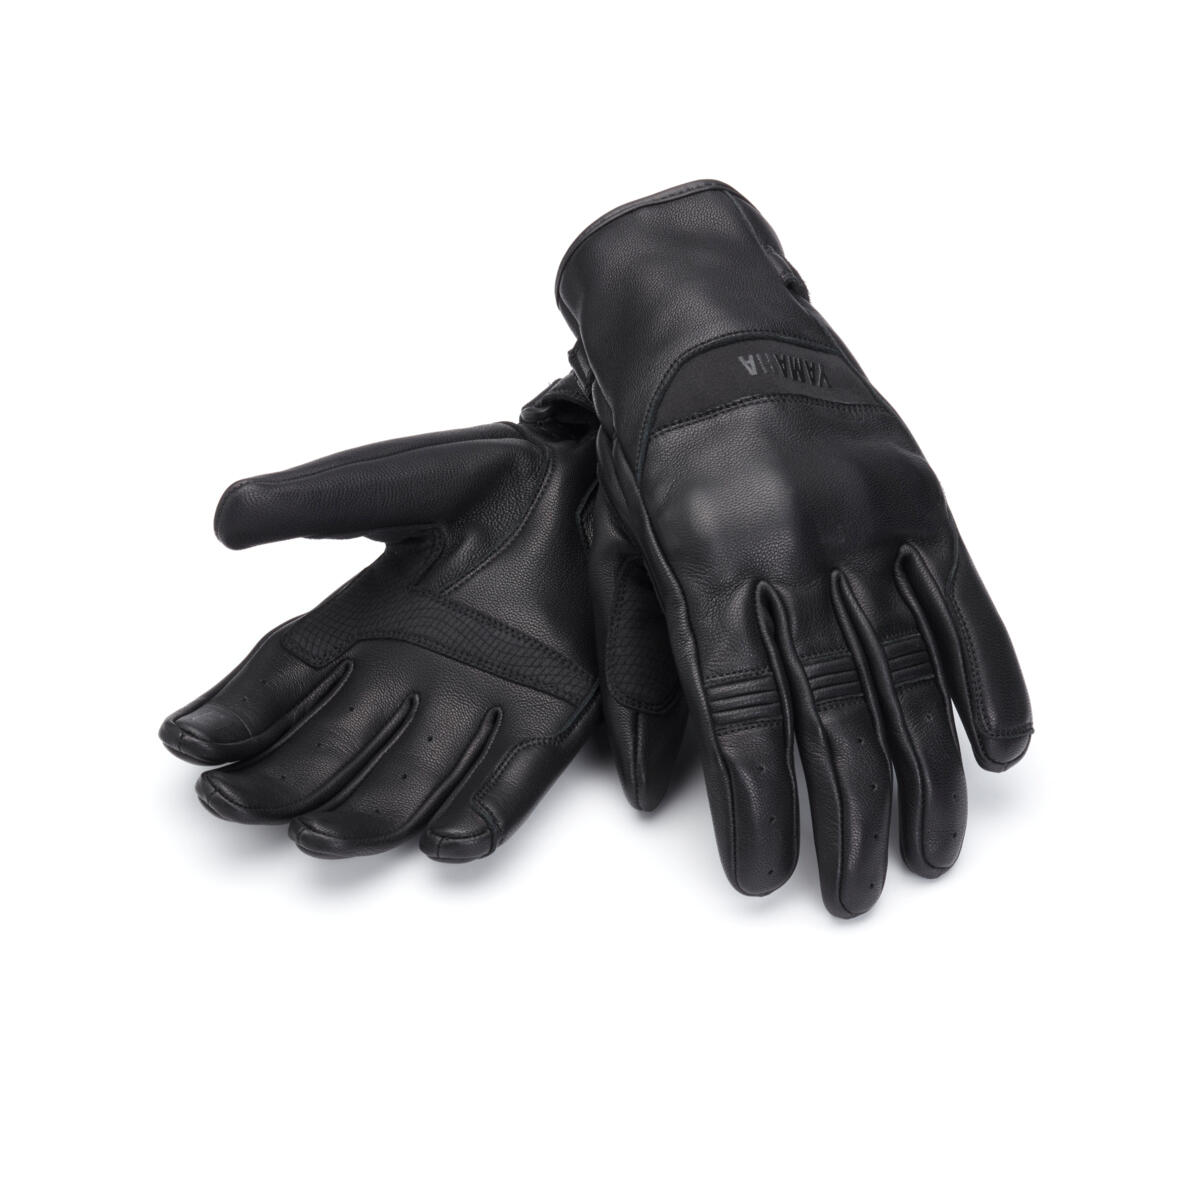 yamaha motorcycle gloves